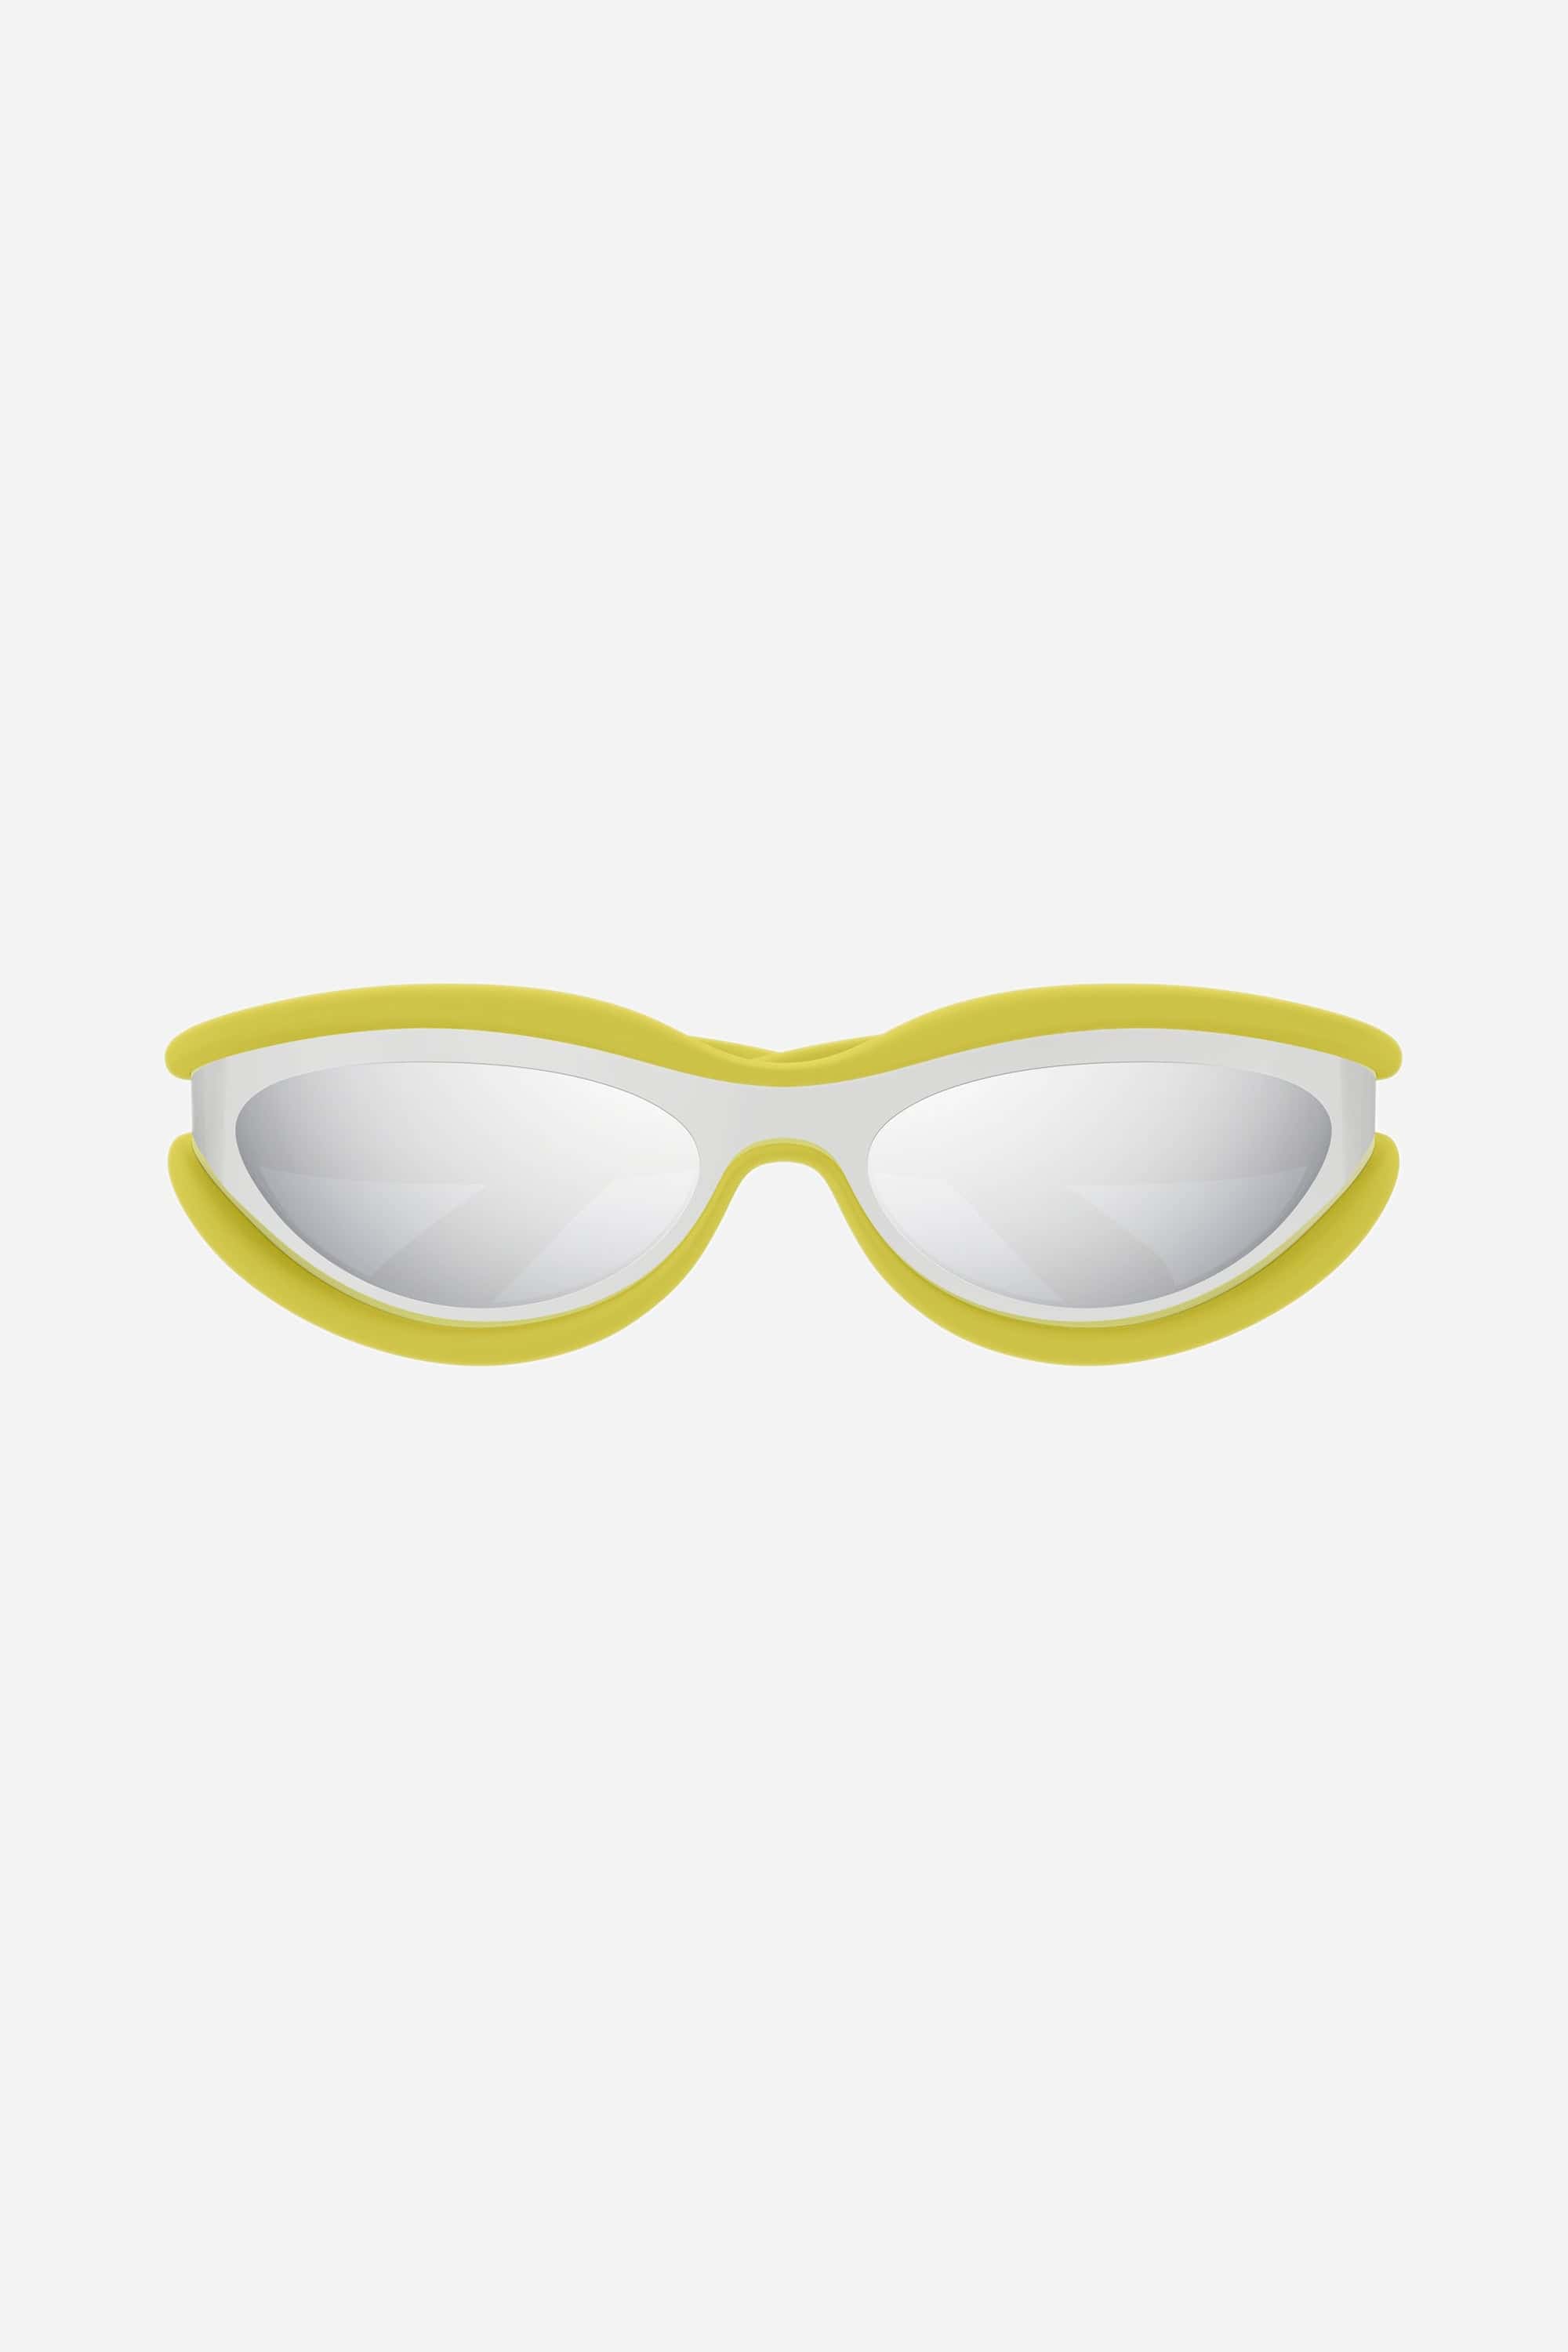 Bottega Veneta lime rubberized sunglasses - Eyewear Club